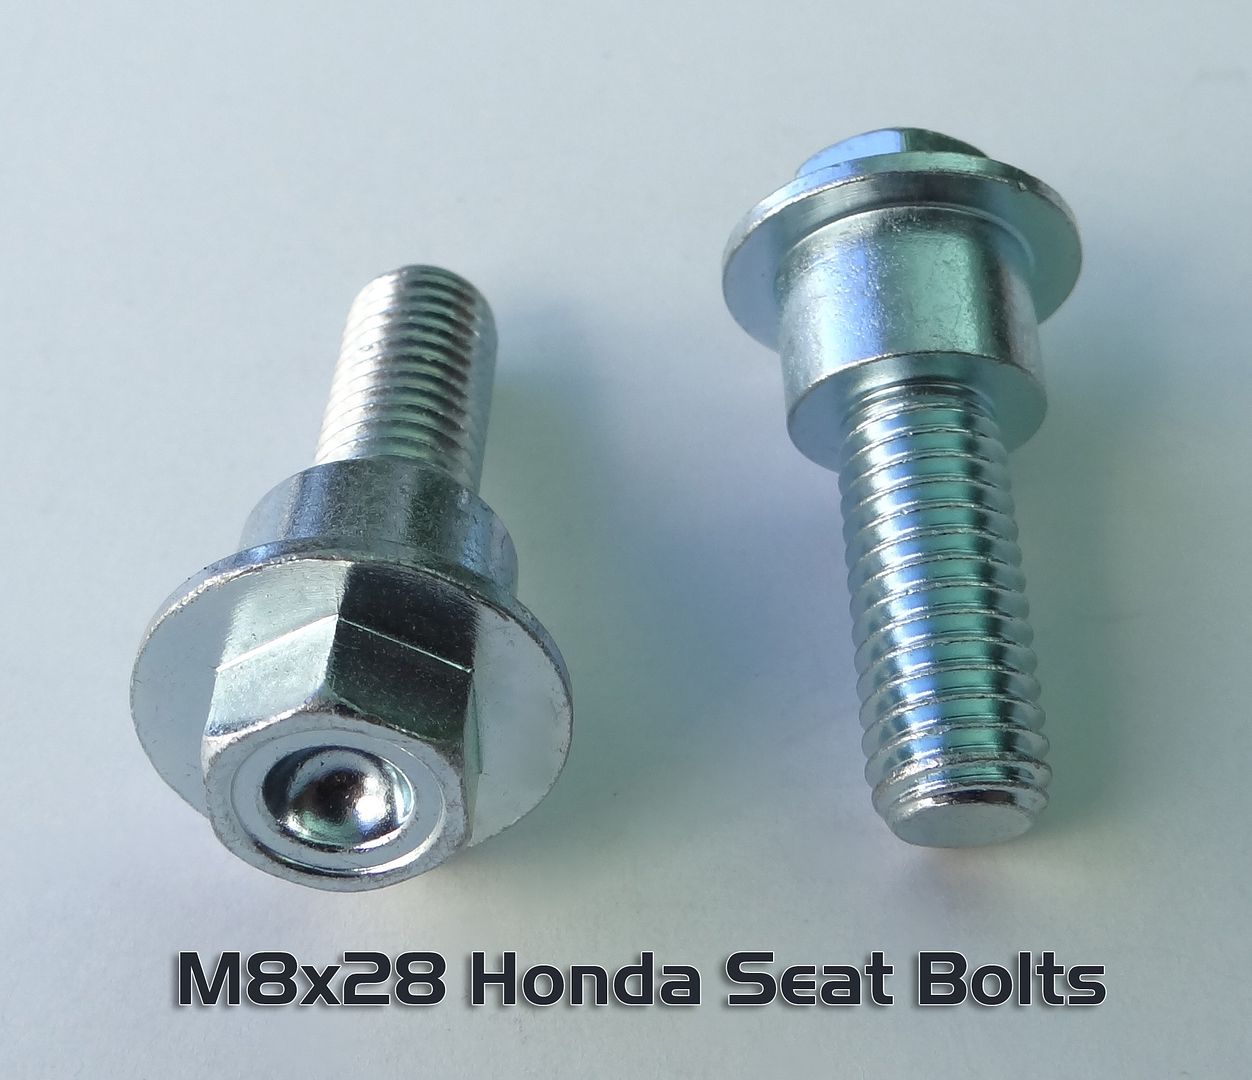 SPEOLT HONDA CRF M8X28 SEAT BOLTS photo M8x28-Honda-Seat-Bolts_zpsfc0dla6q.jpg